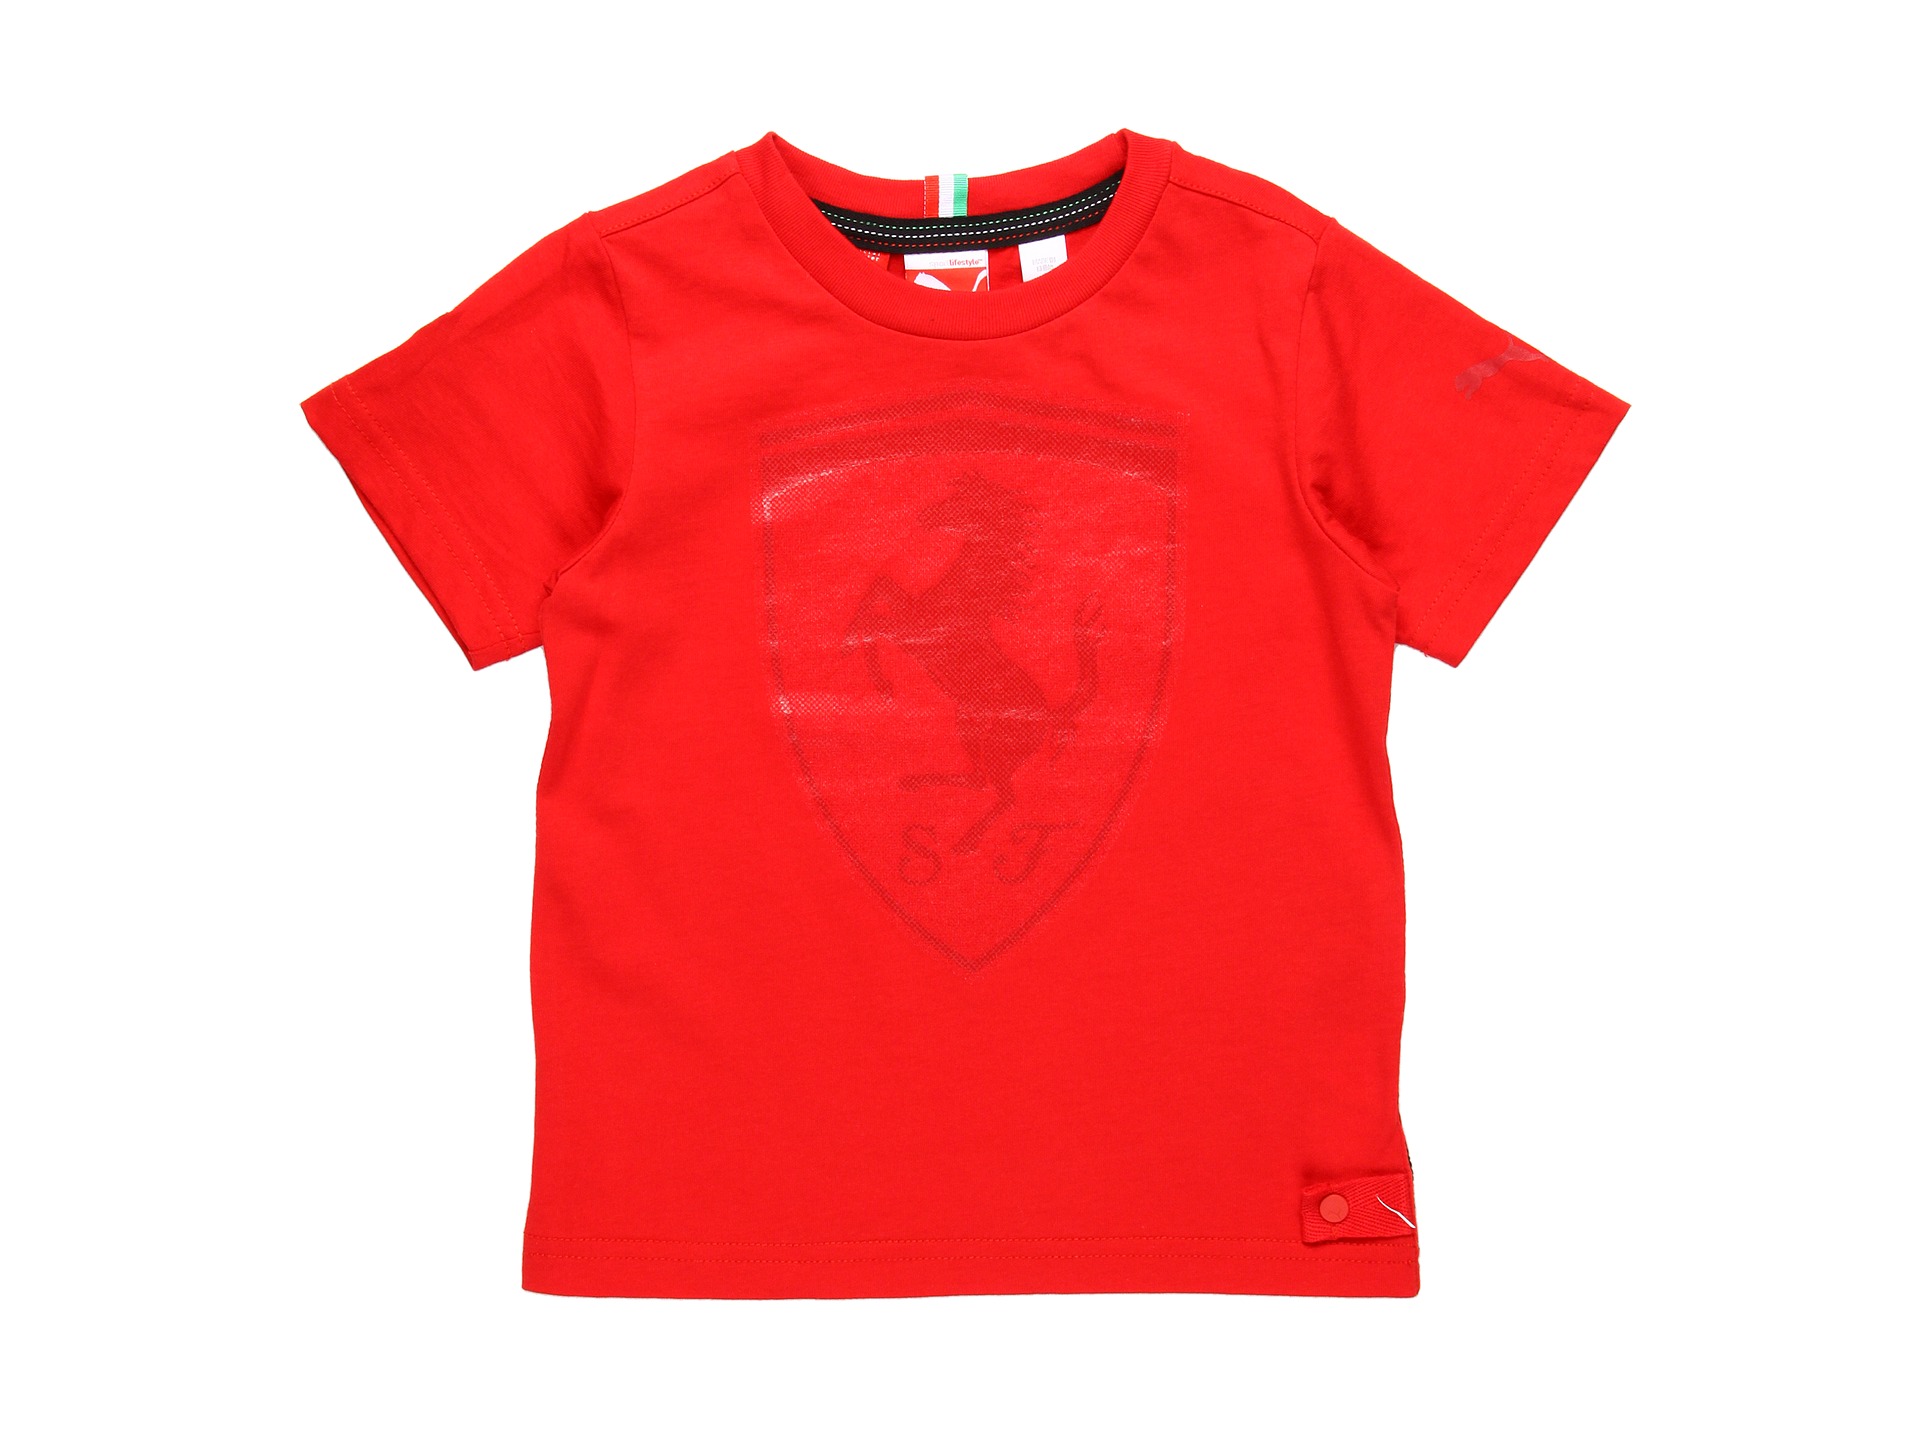 Puma Kids Ferrari Logo Tee (Toddler) $23.99 $26.00 SALE